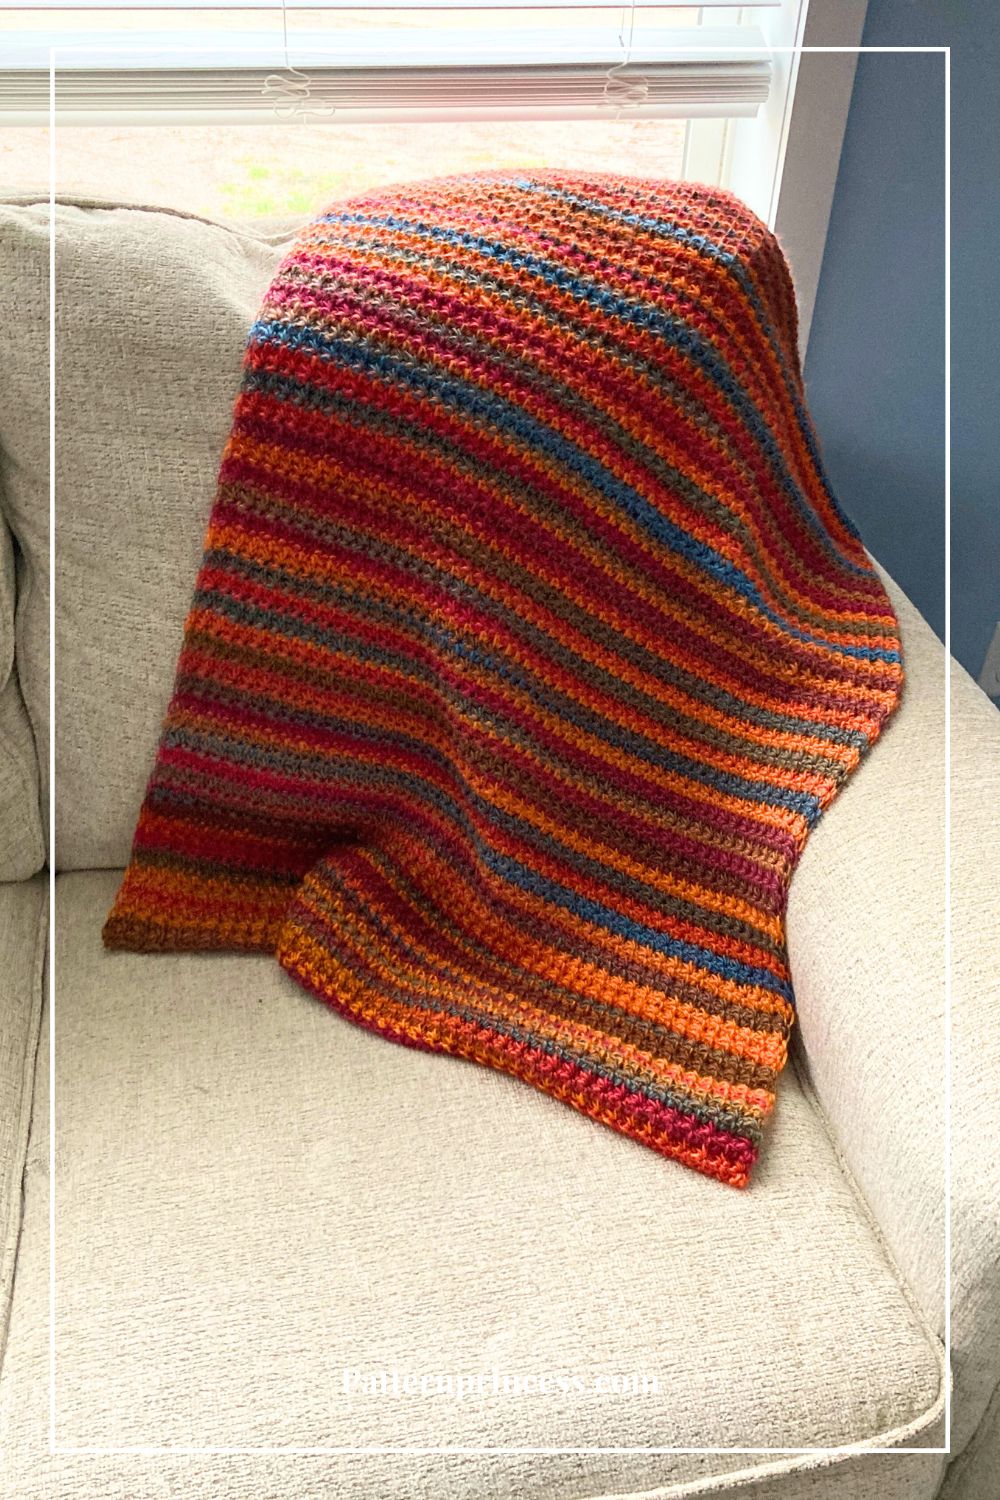 Modern Colorful Baby Blanket Crochet Pattern PDF by Victoria Pietz